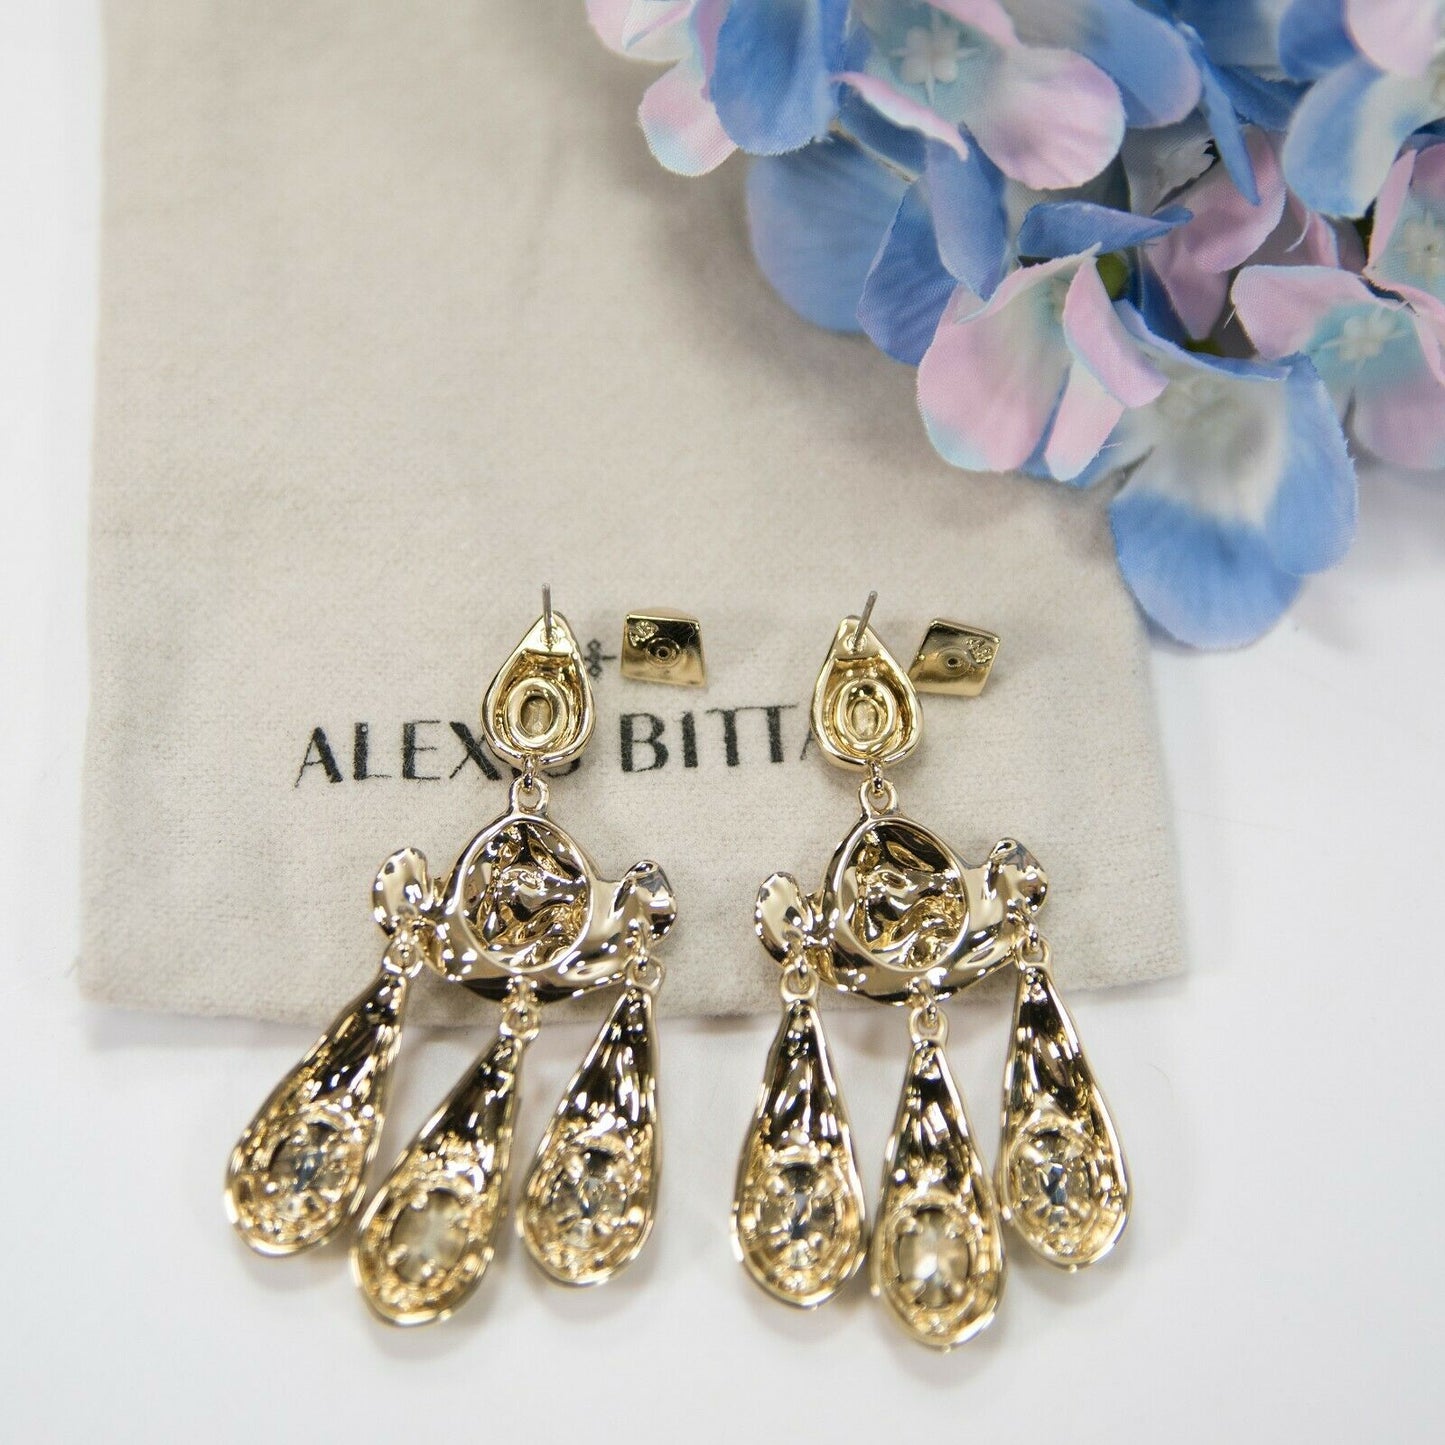 Alexis Bittar Stone Studded Crumpled Metal Chandelier Earrings NWT